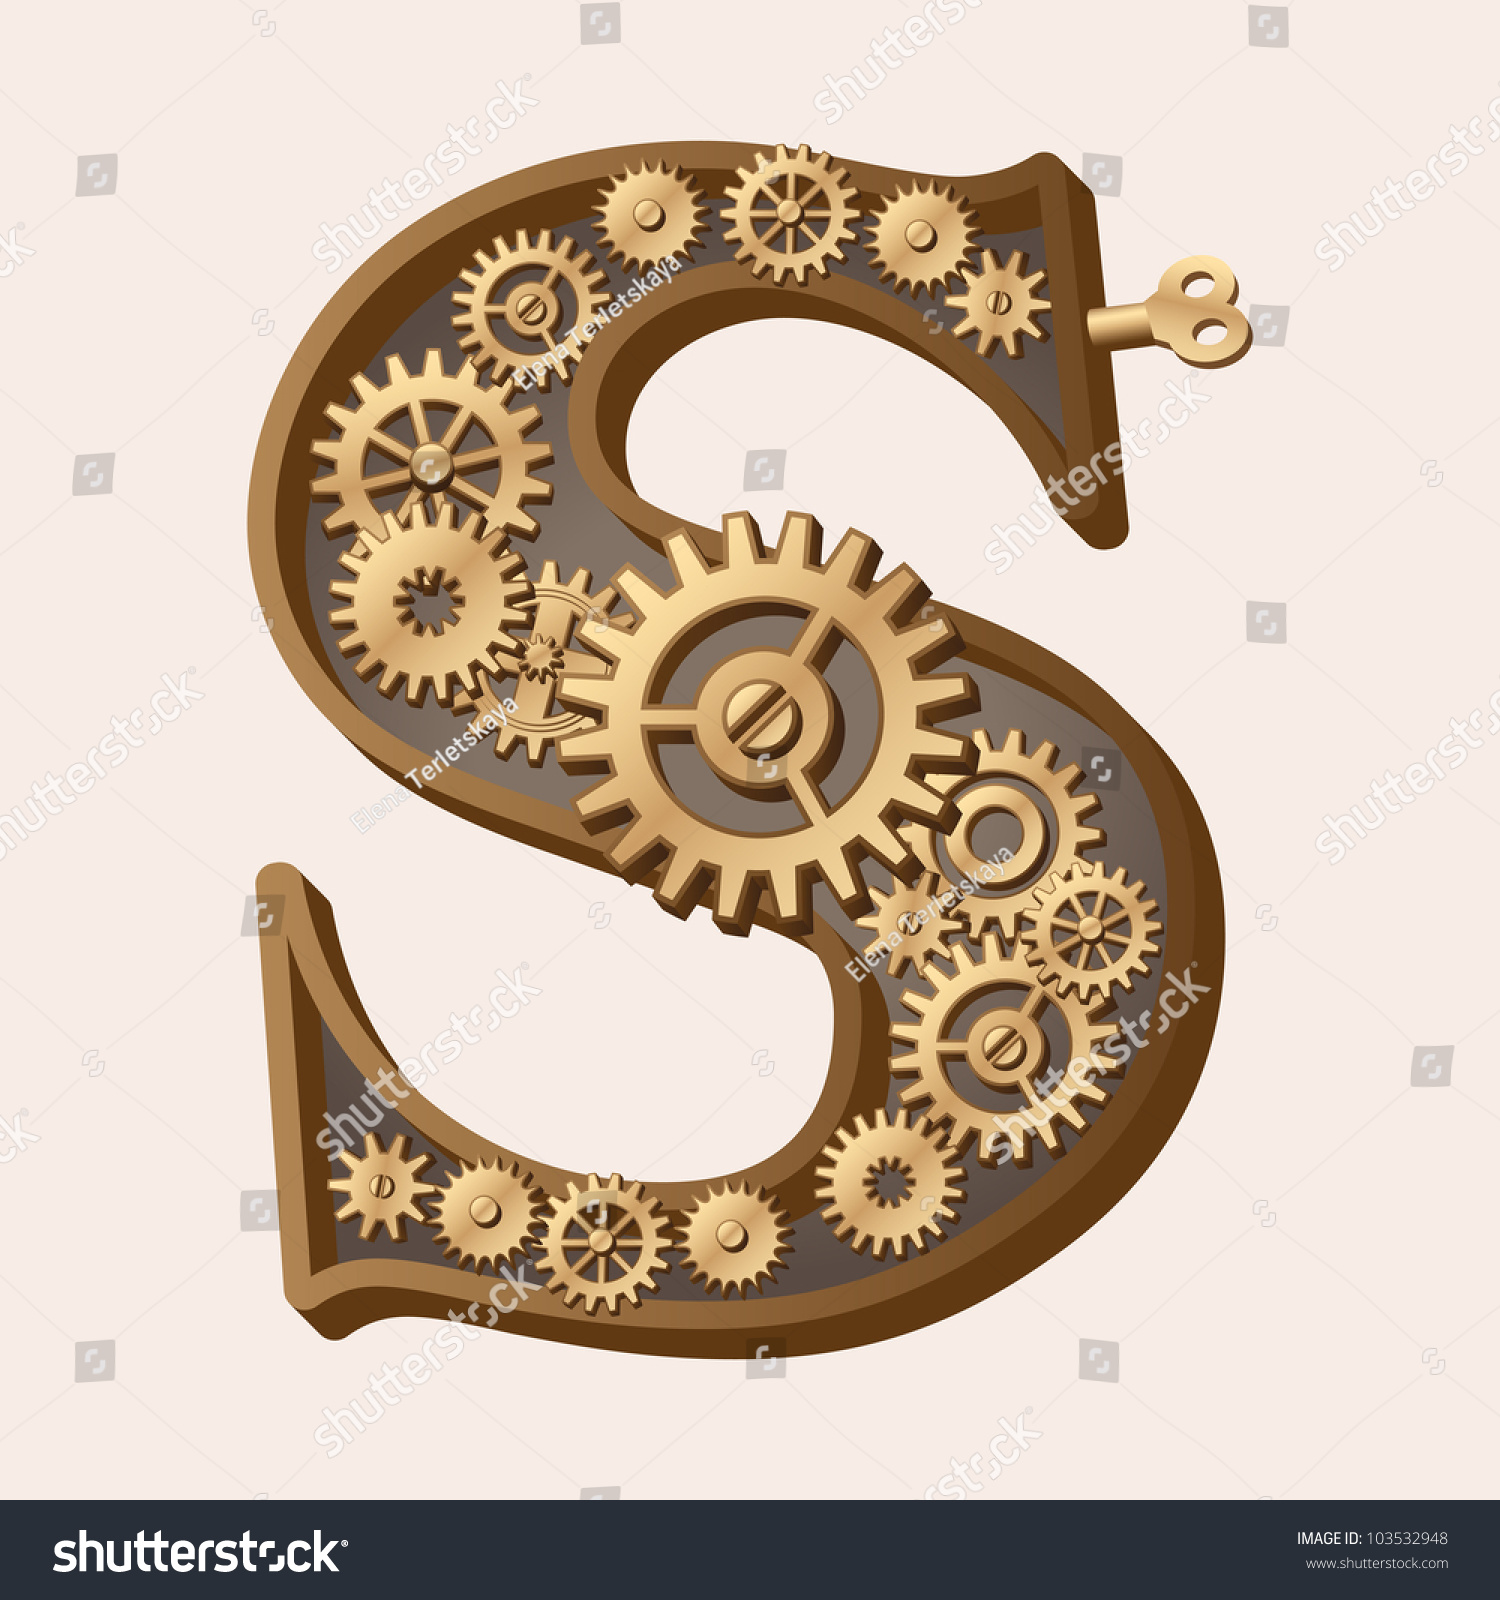 Mechanical Alphabet Made From Gears. Letter S Stock Vector Illustration ...